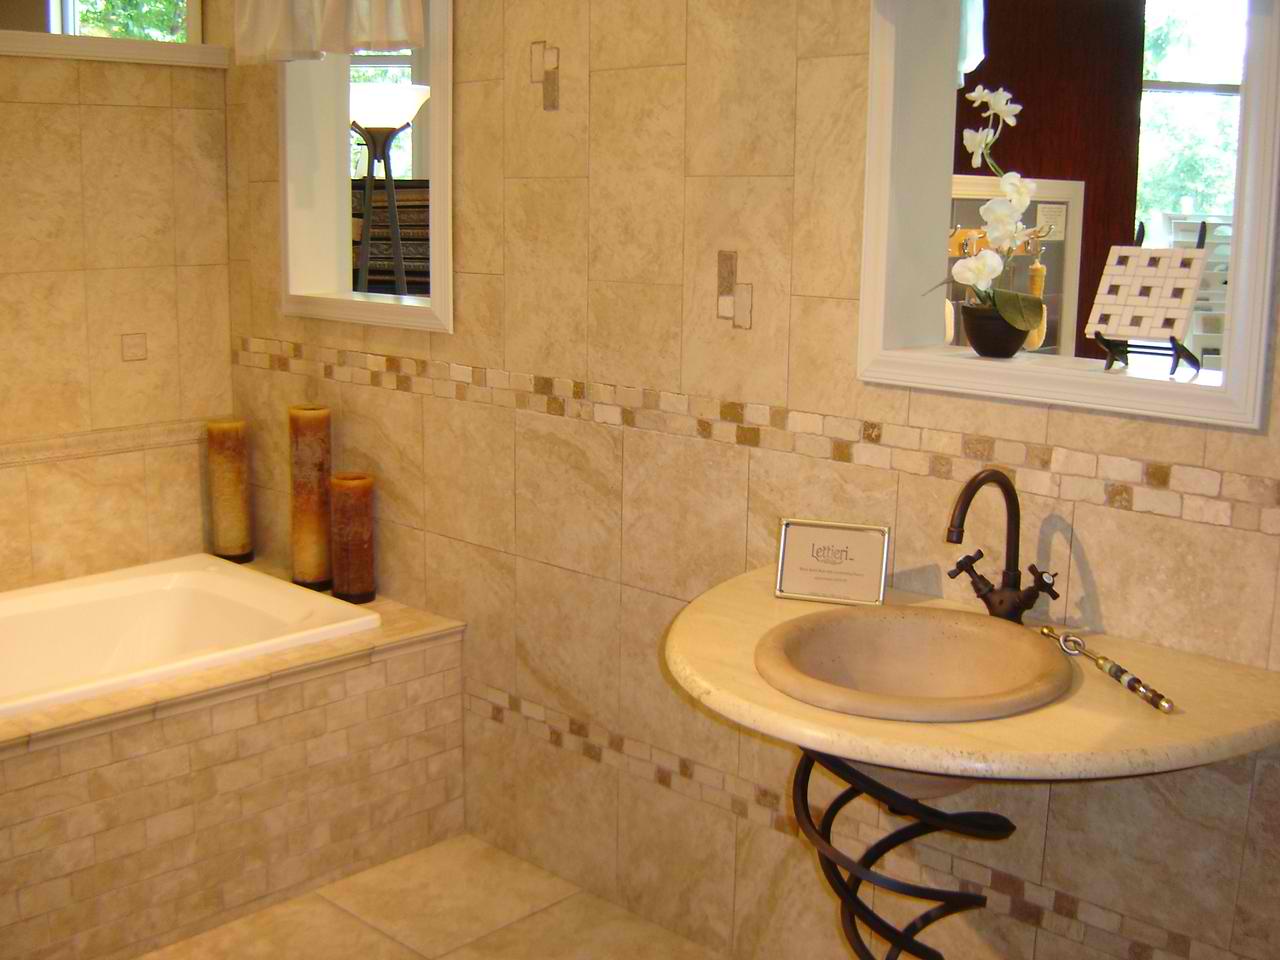 Bathroom Tile Ideas: Bathroom Tile Design